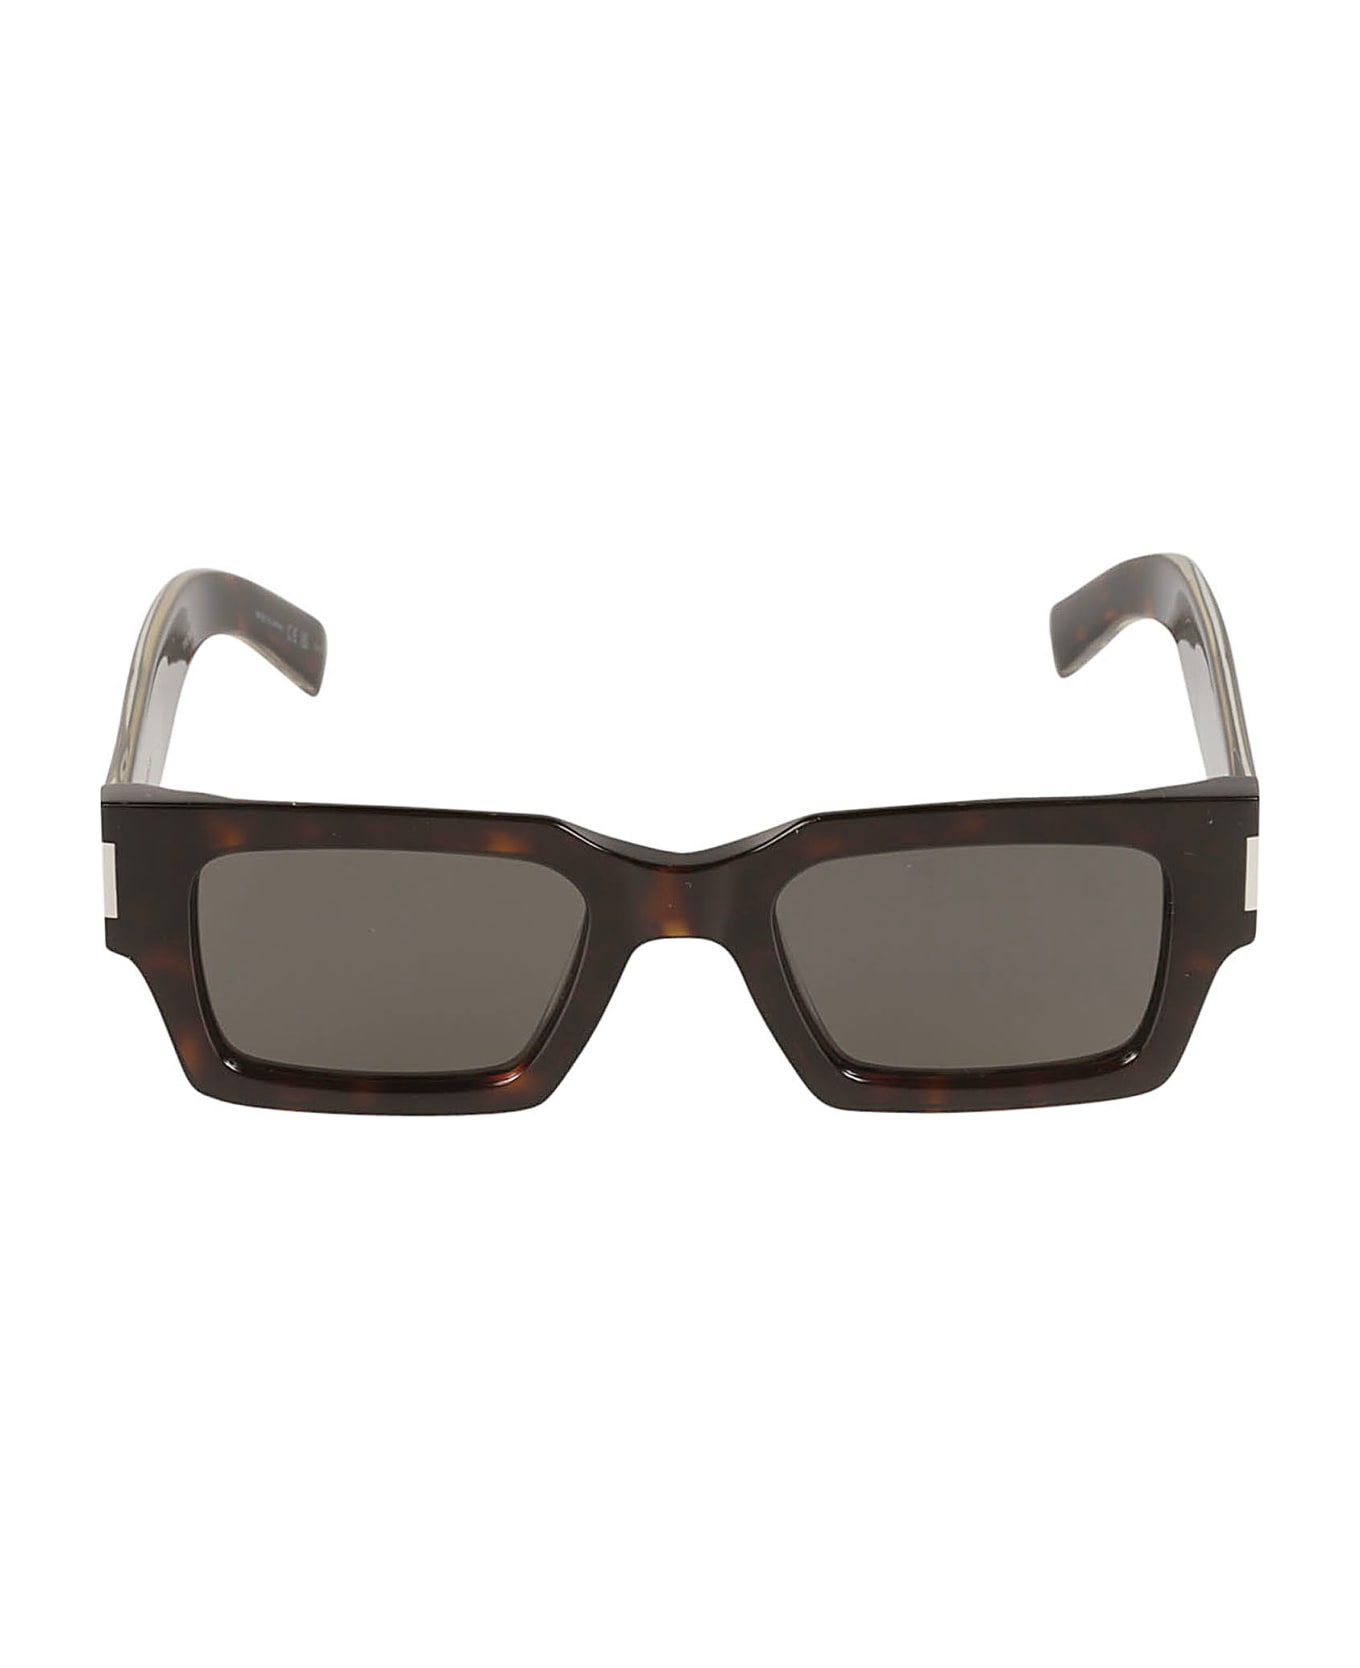 Saint Laurent Eyewear Rectangular Frame Flame Effect Sunglasses - Havana/Crystal/Grey